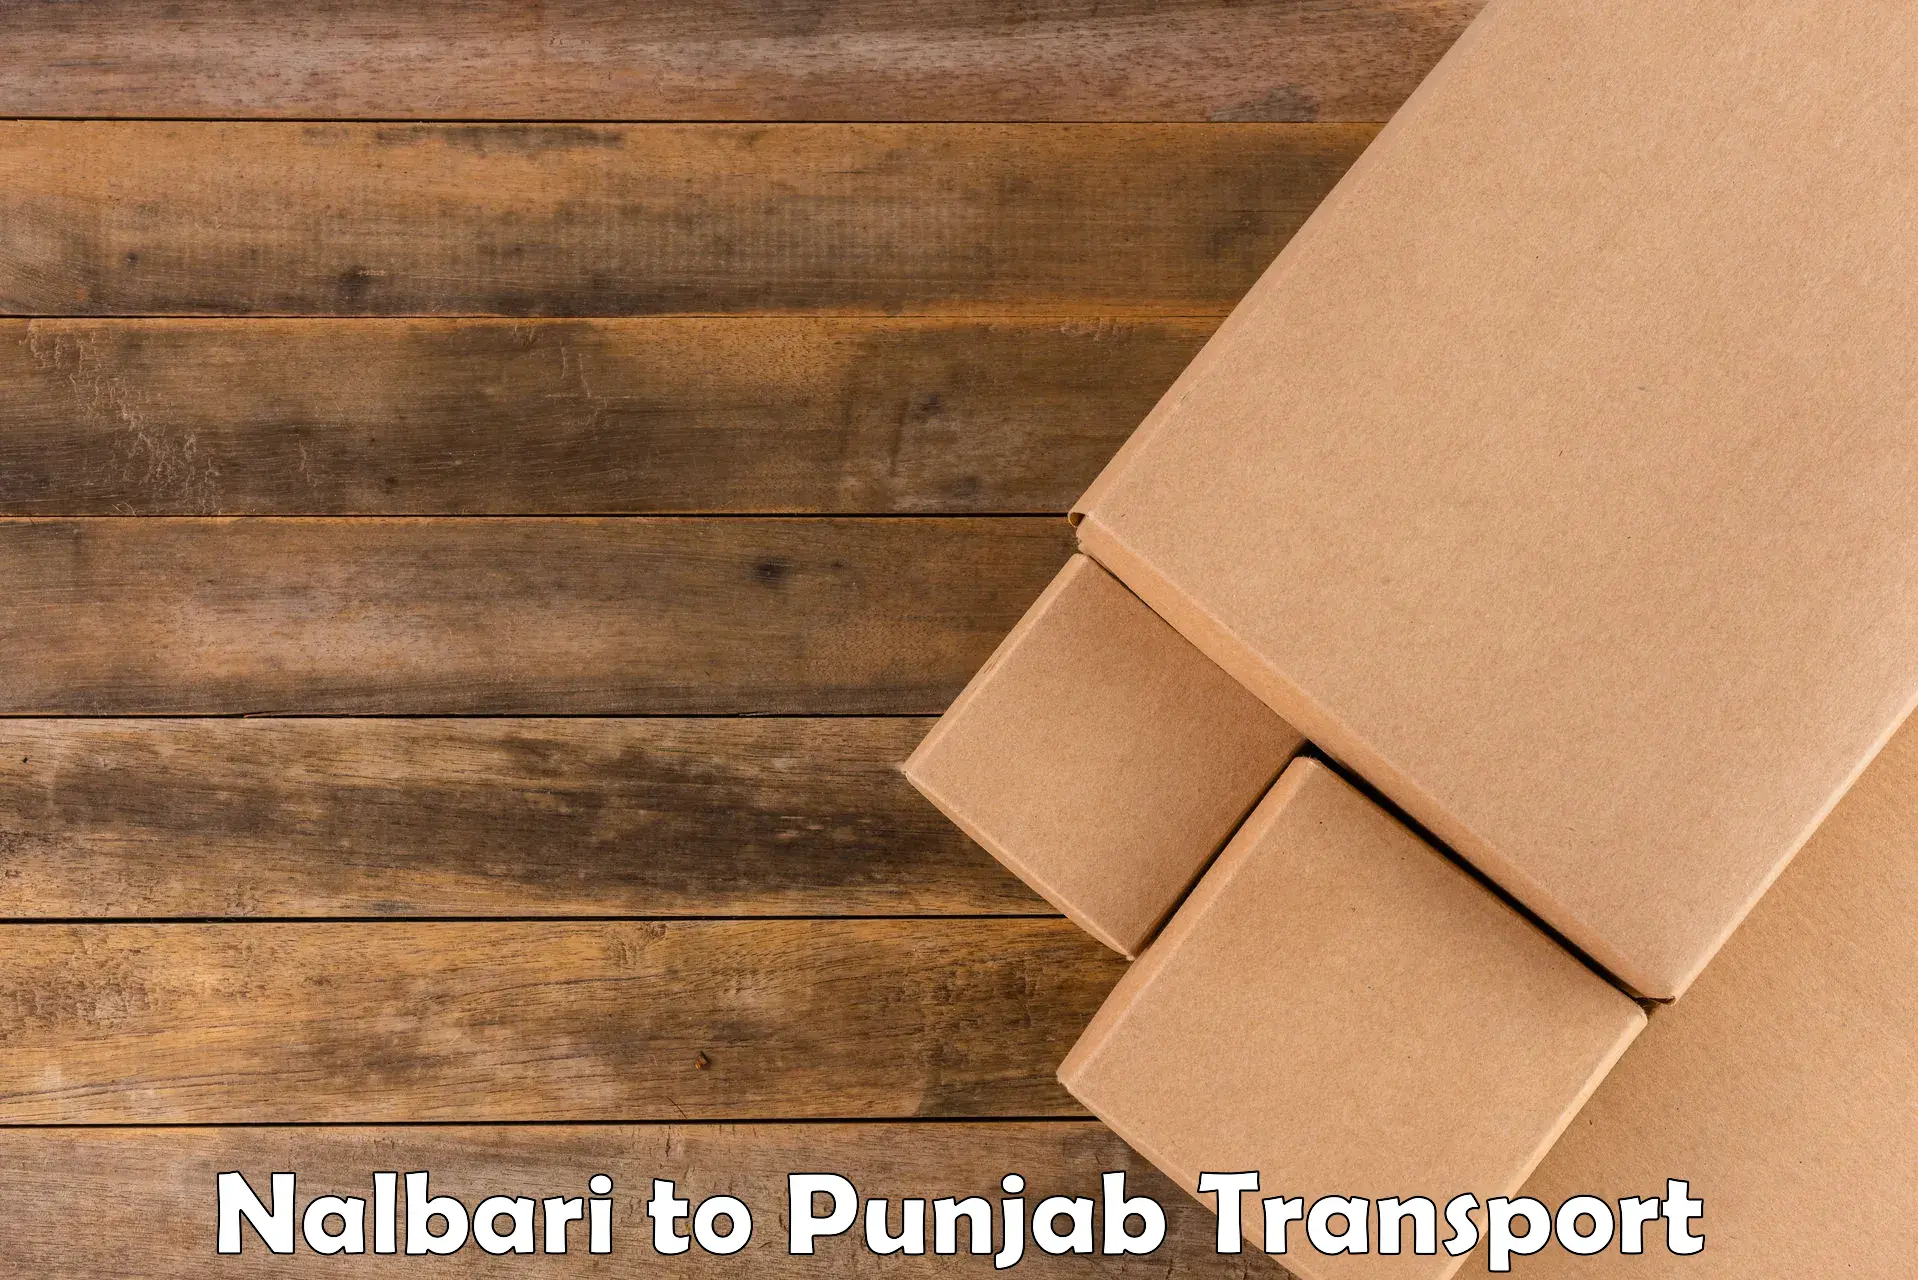 Online transport service Nalbari to Patiala